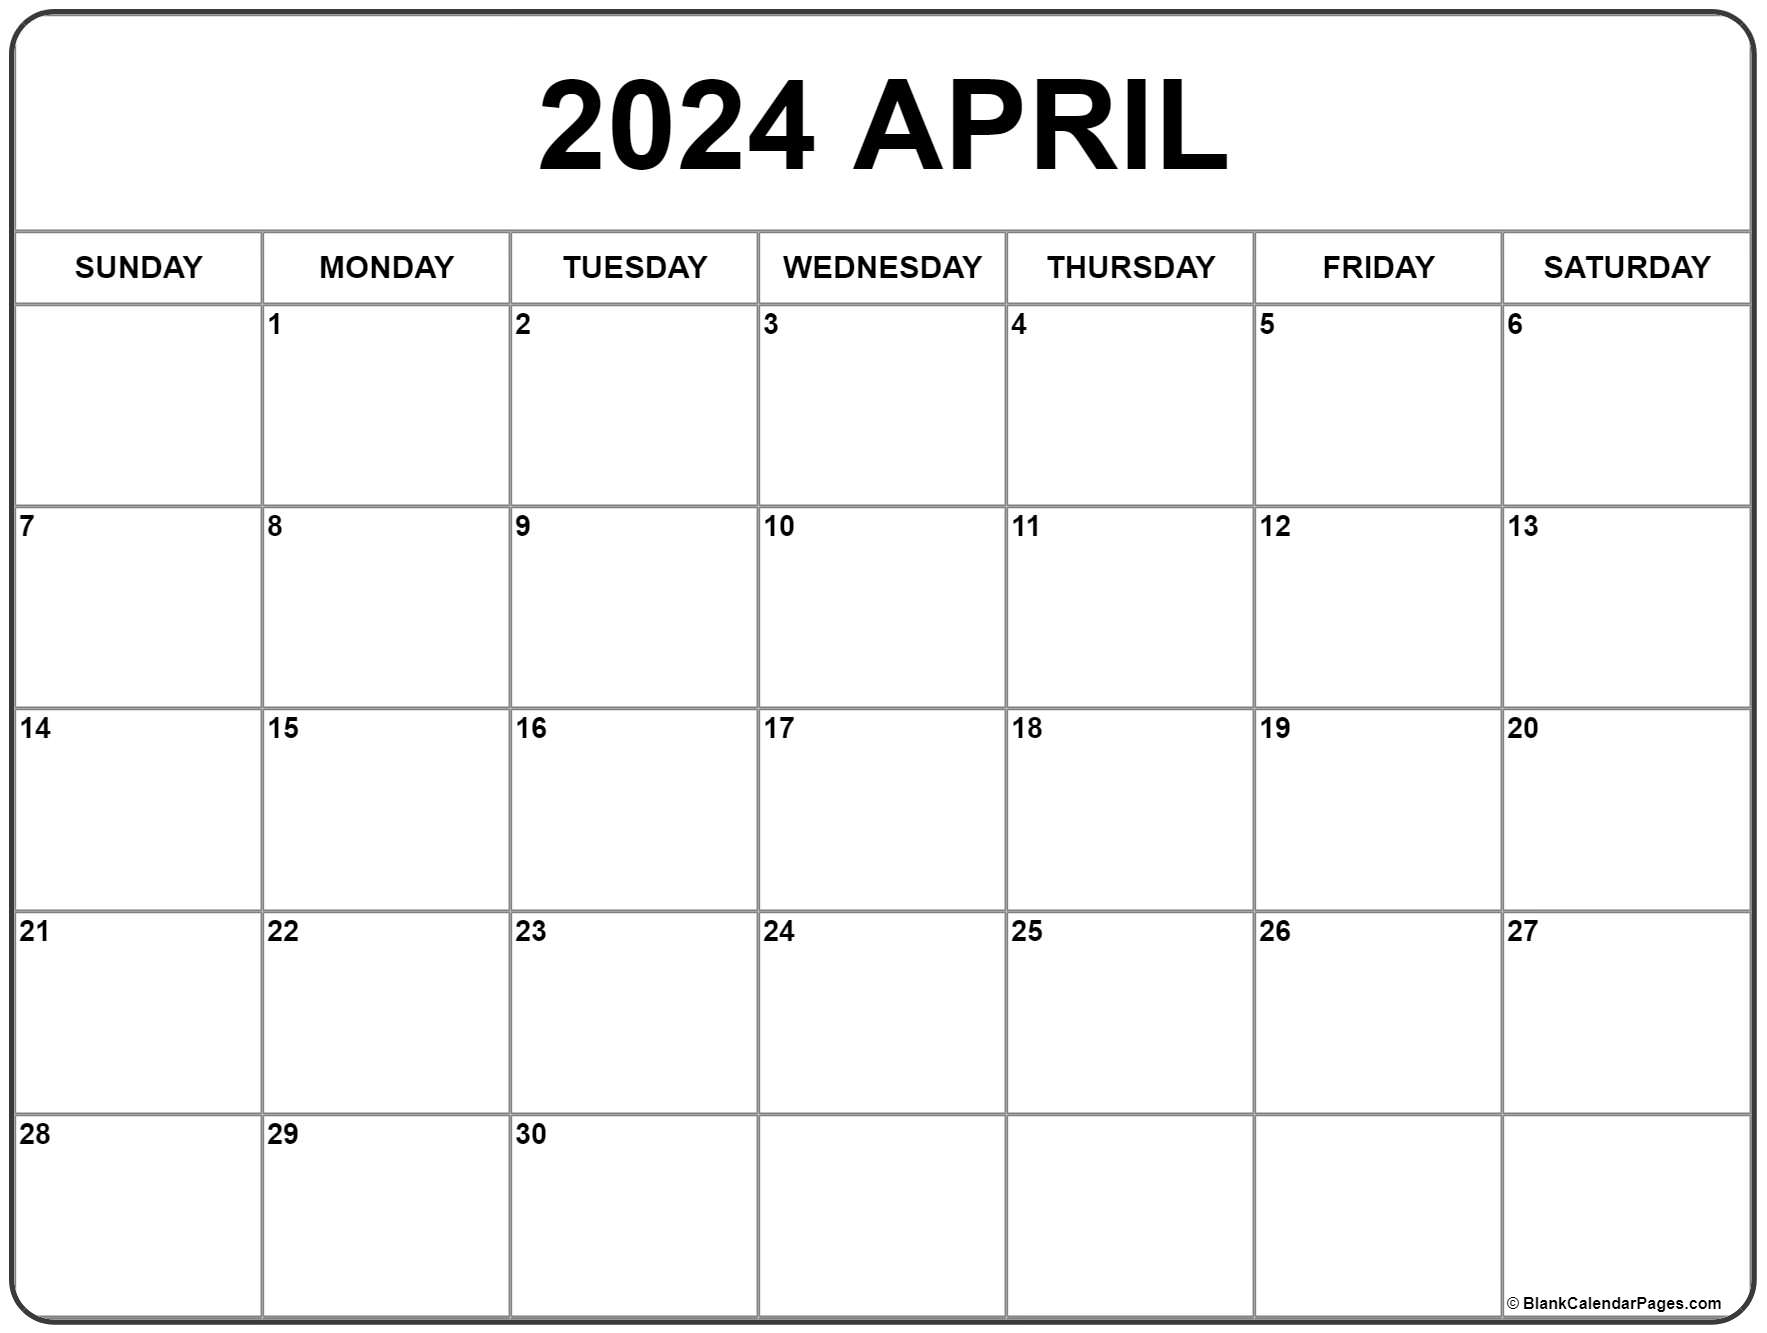 April 2024 Calendar | Free Printable Calendar regarding Blank Calendar For April 2024